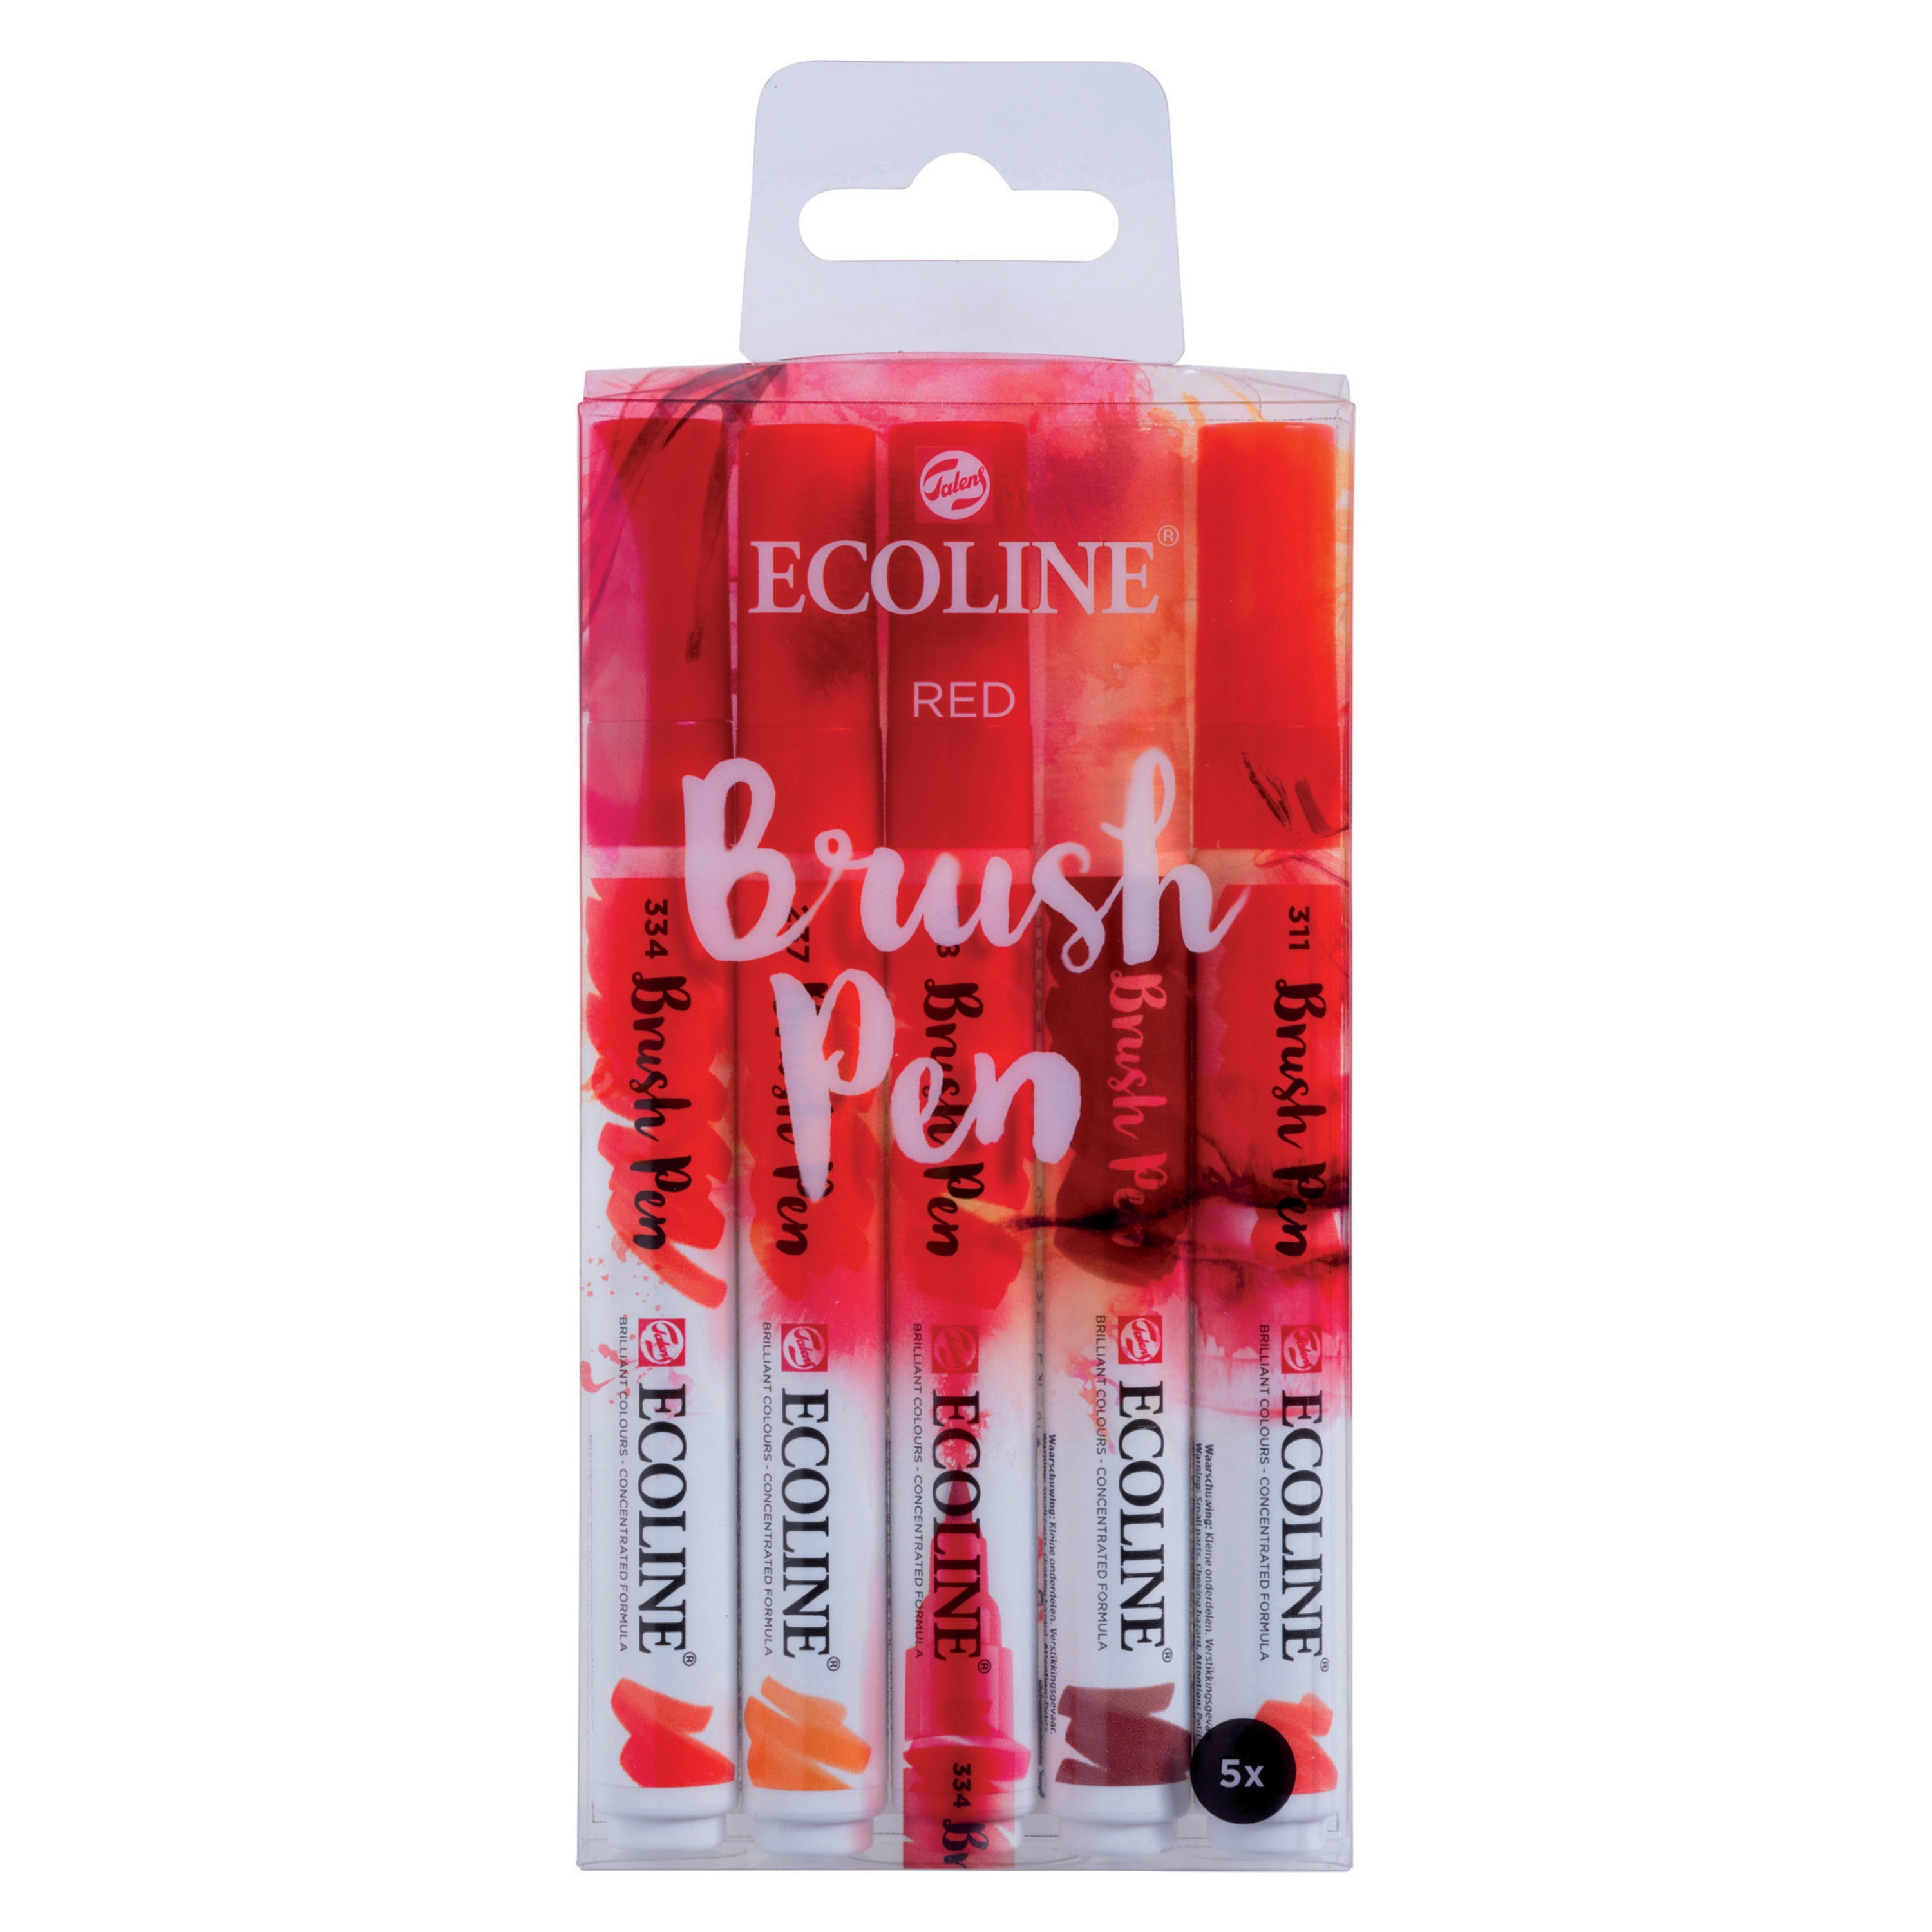  Ecoline Brush Pen Set of 30, Additional Colors (11509006)